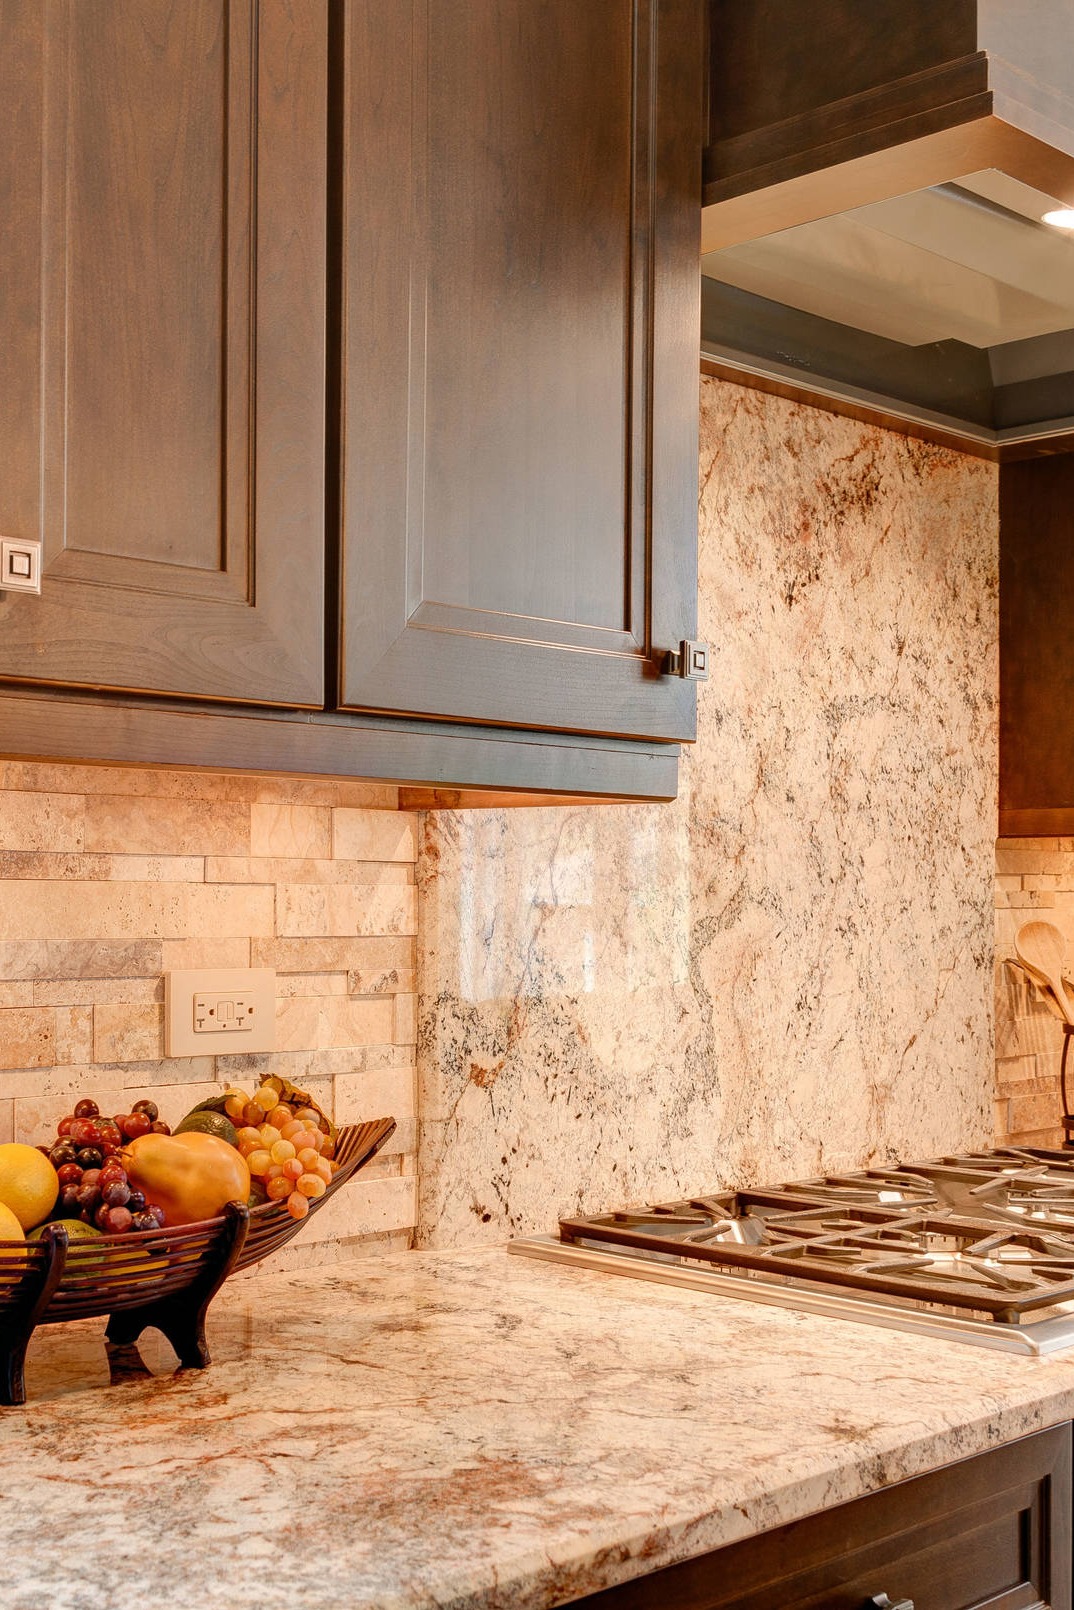 Dark Color Kitchen Cabinets Sienna Bordeaux Granite Countertops Multi Size Natural Stone Backsplash